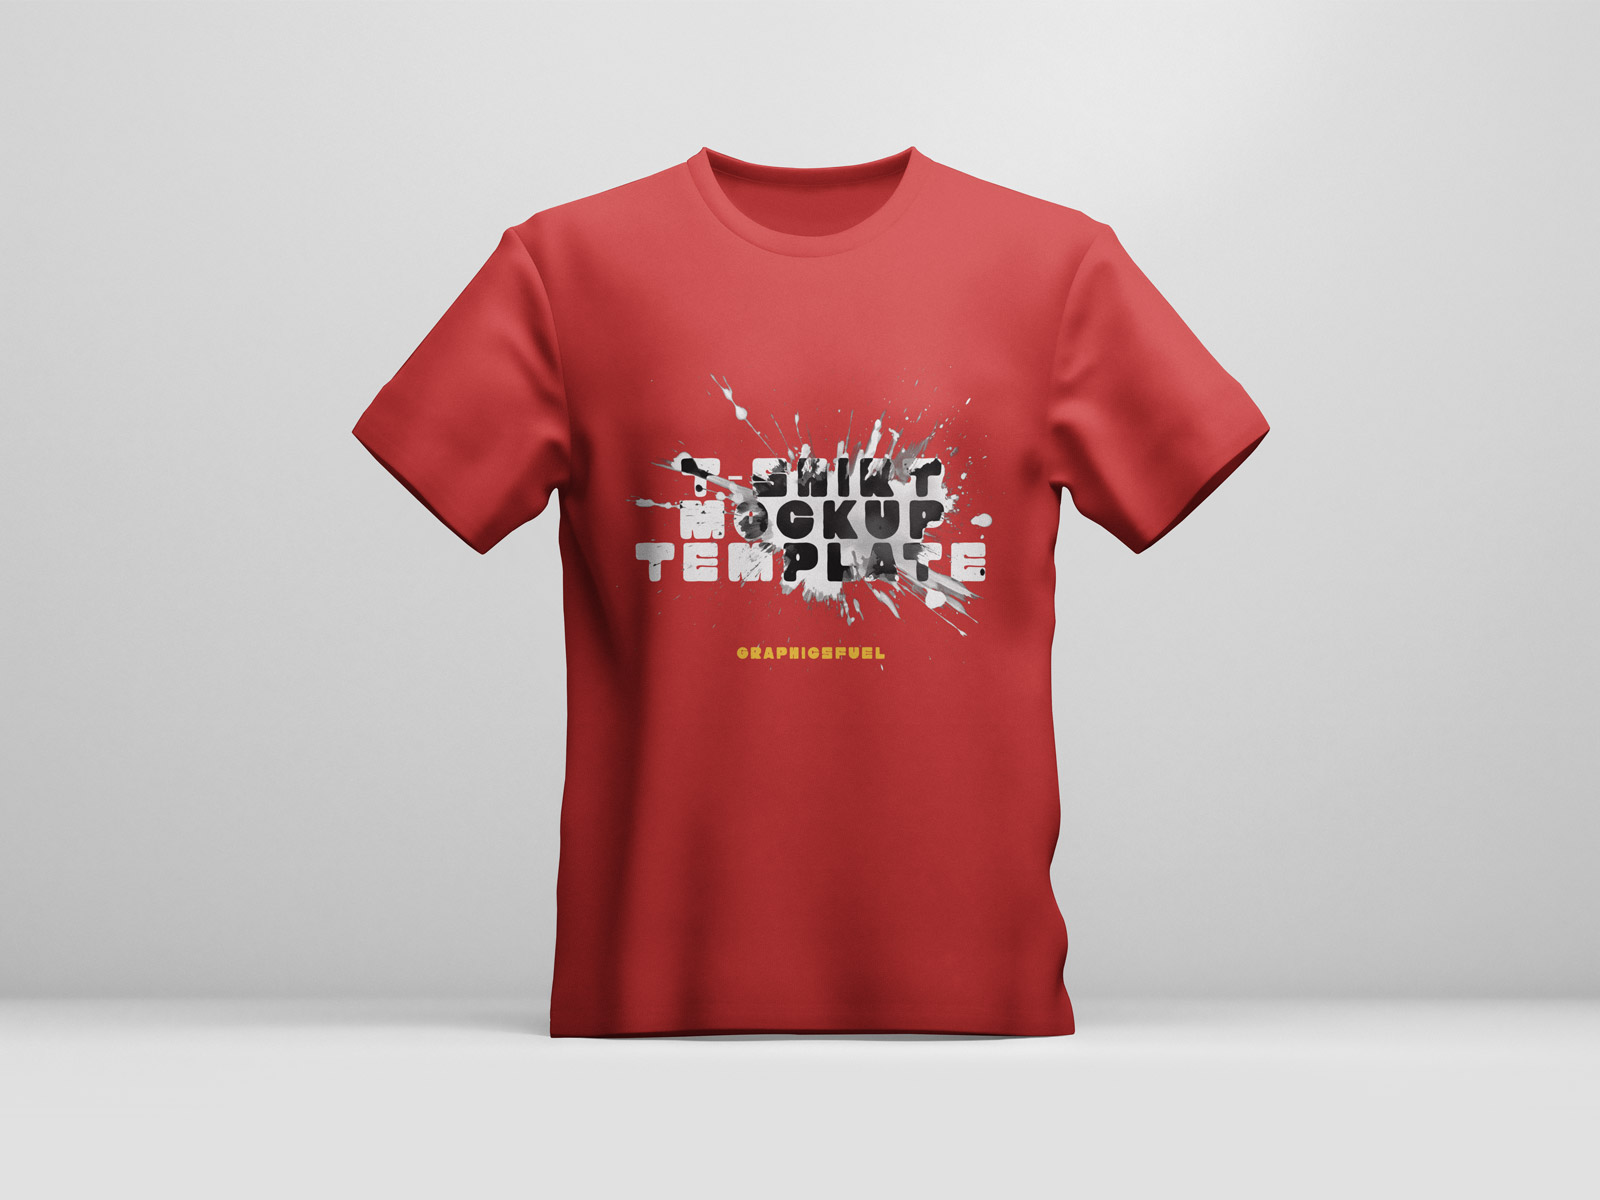 T-shirt Mockup Template PSD